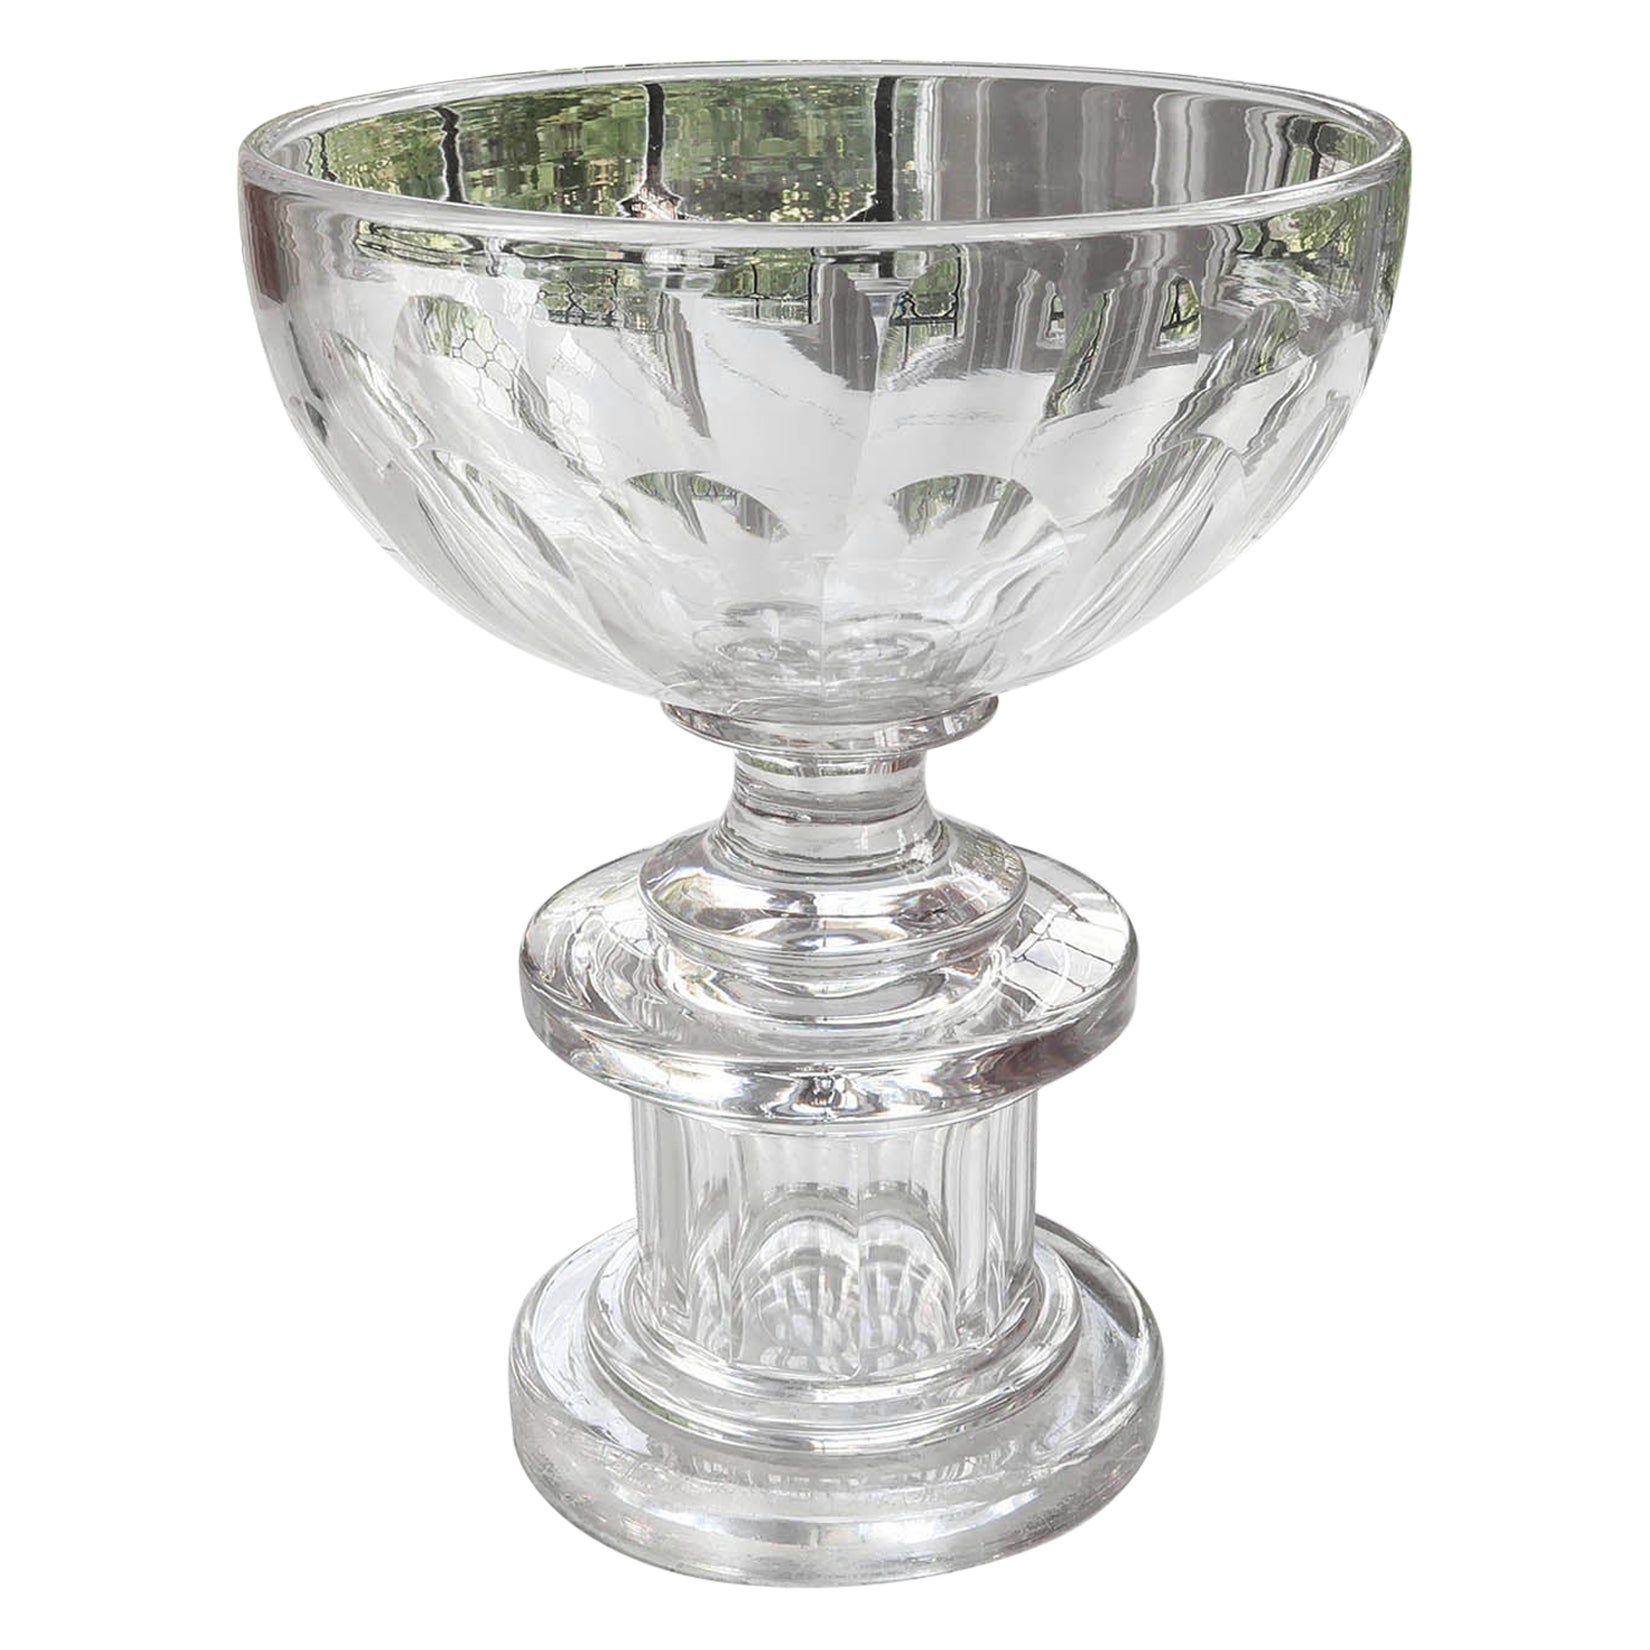  Large Antique Georgian Style Glass Pedestal Bowl, English, 19th Century